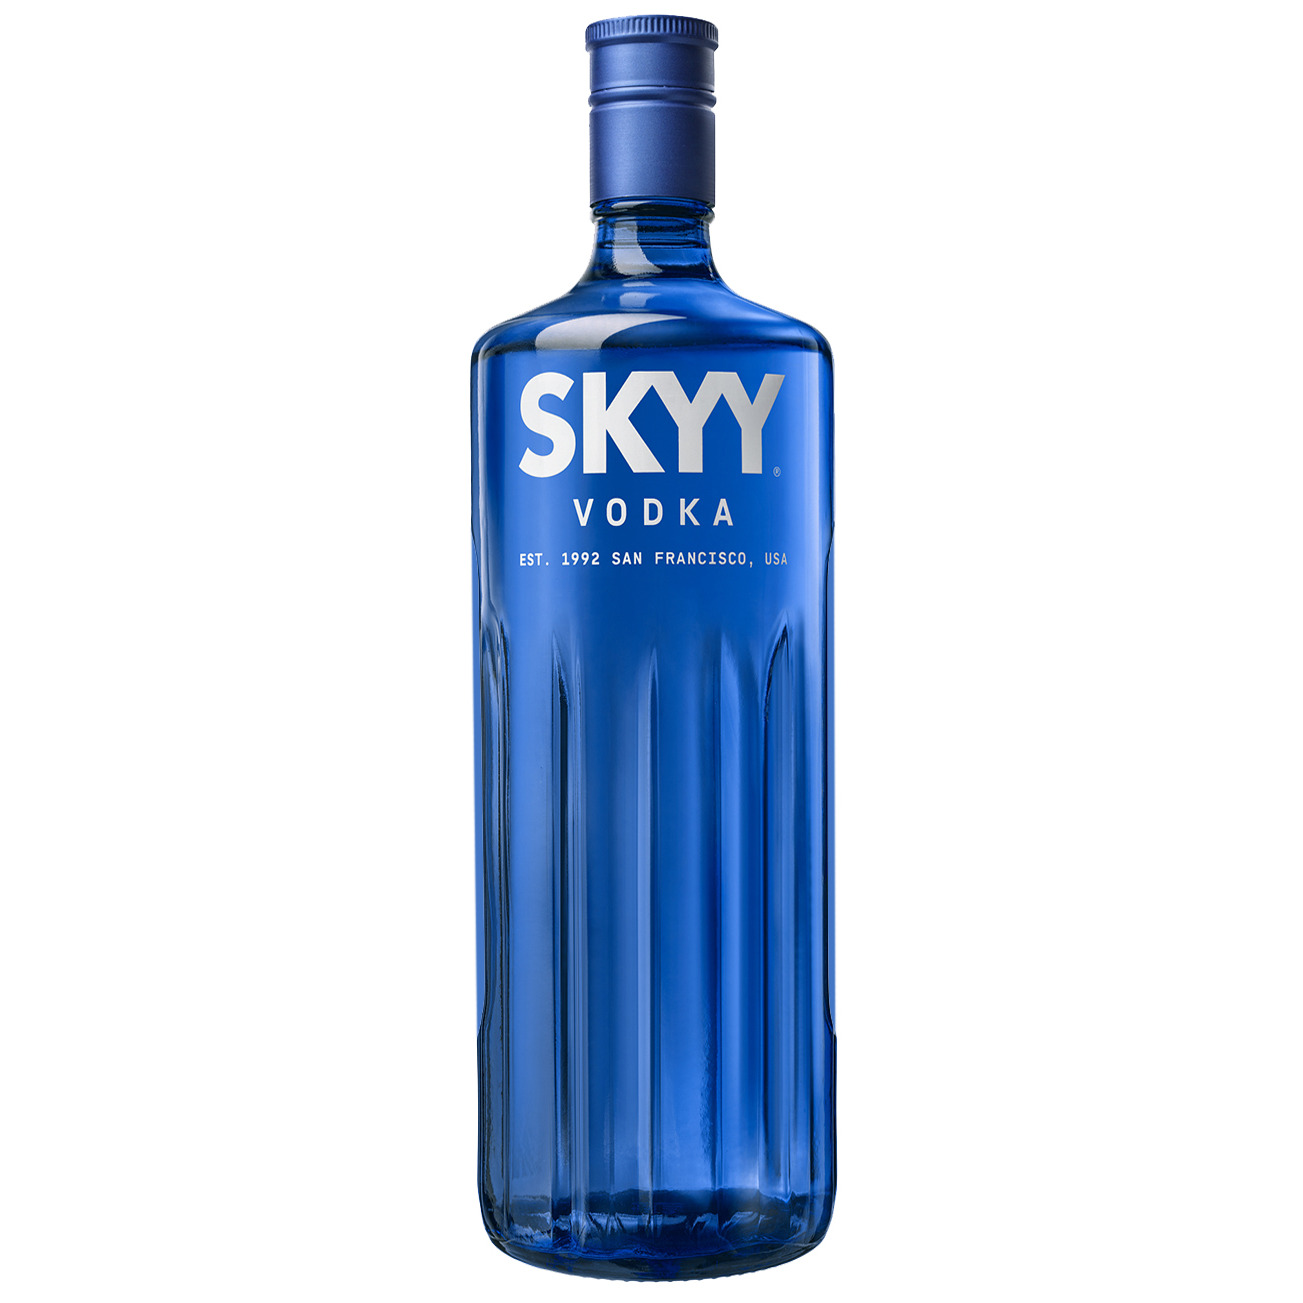 Skyy 1 liter